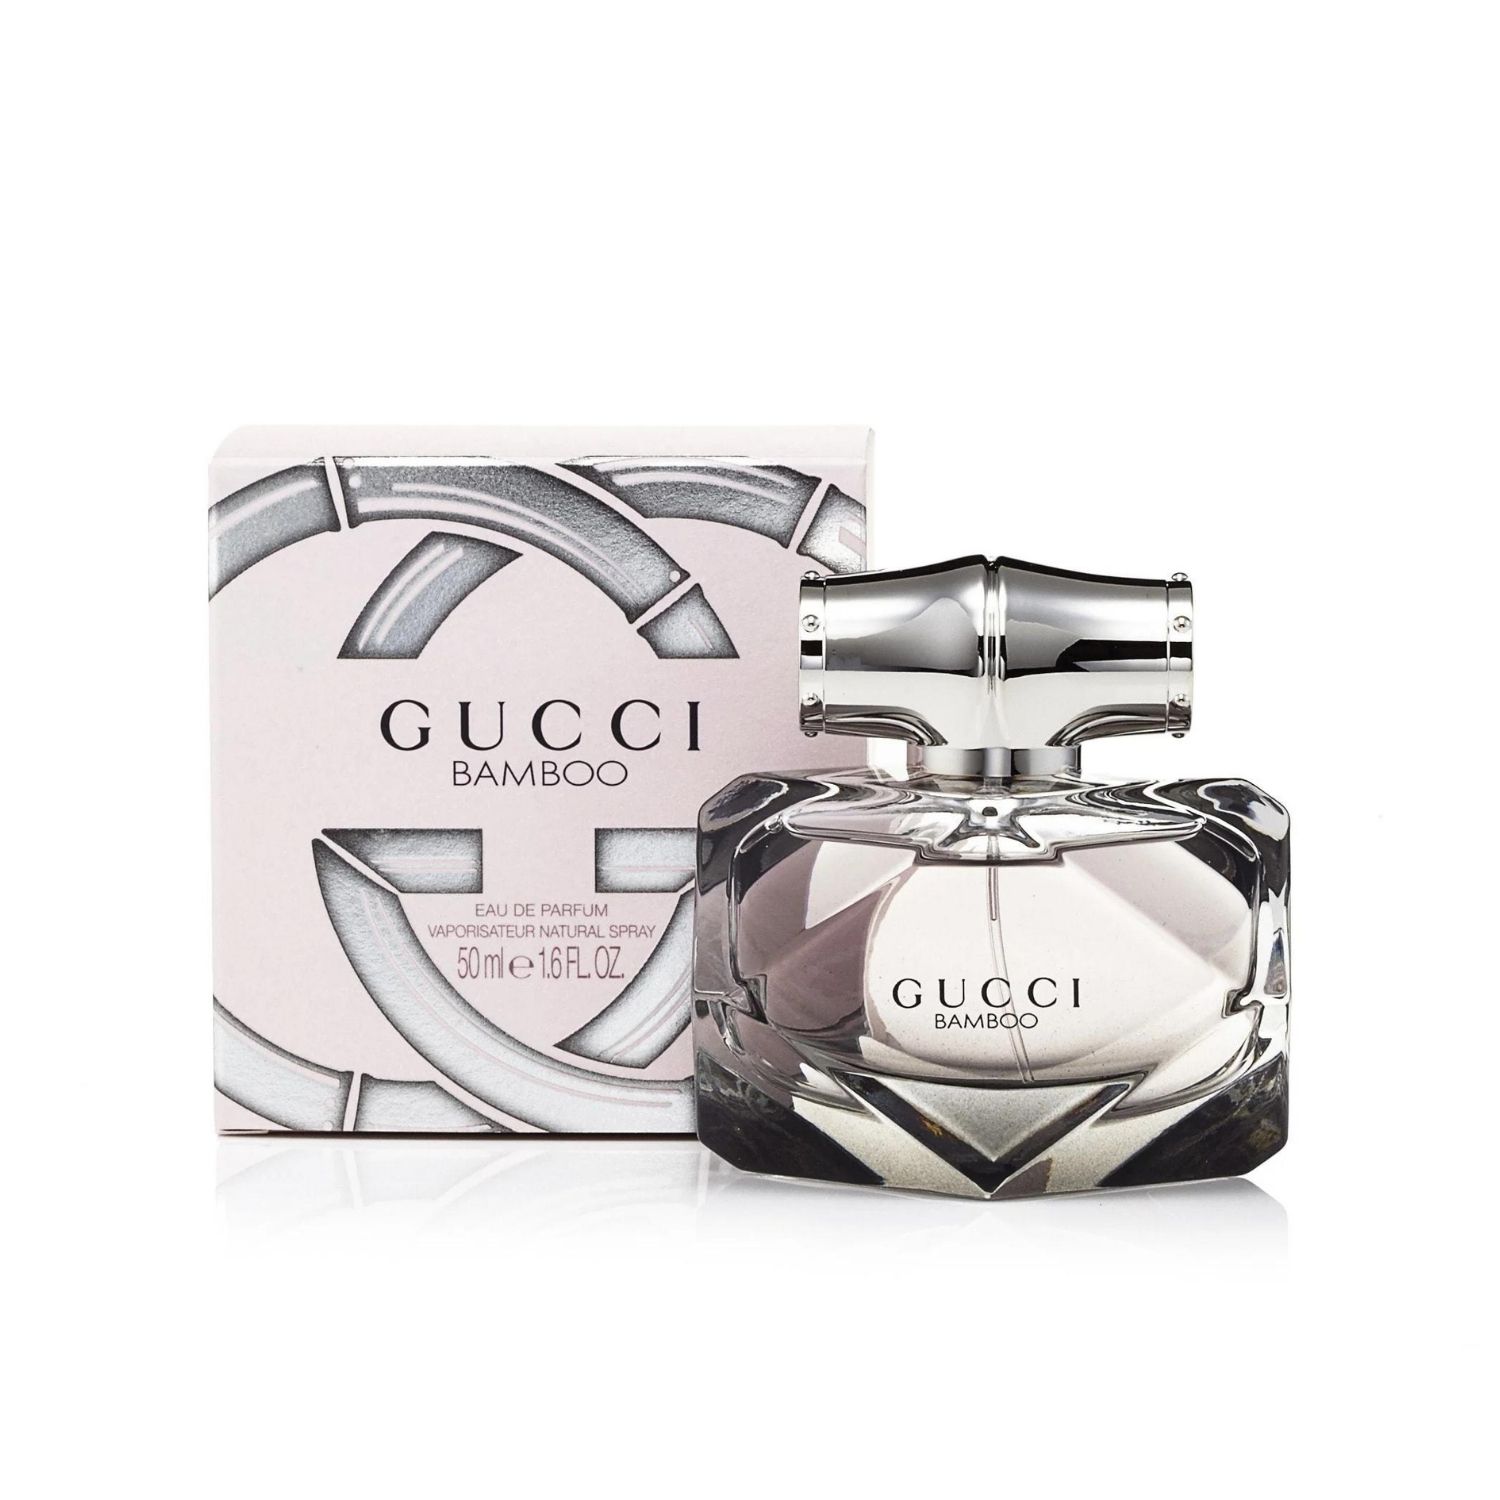 Gucci Bamboo Eau De Parfum Spray for Women 1.6 oz - image 3 of 6